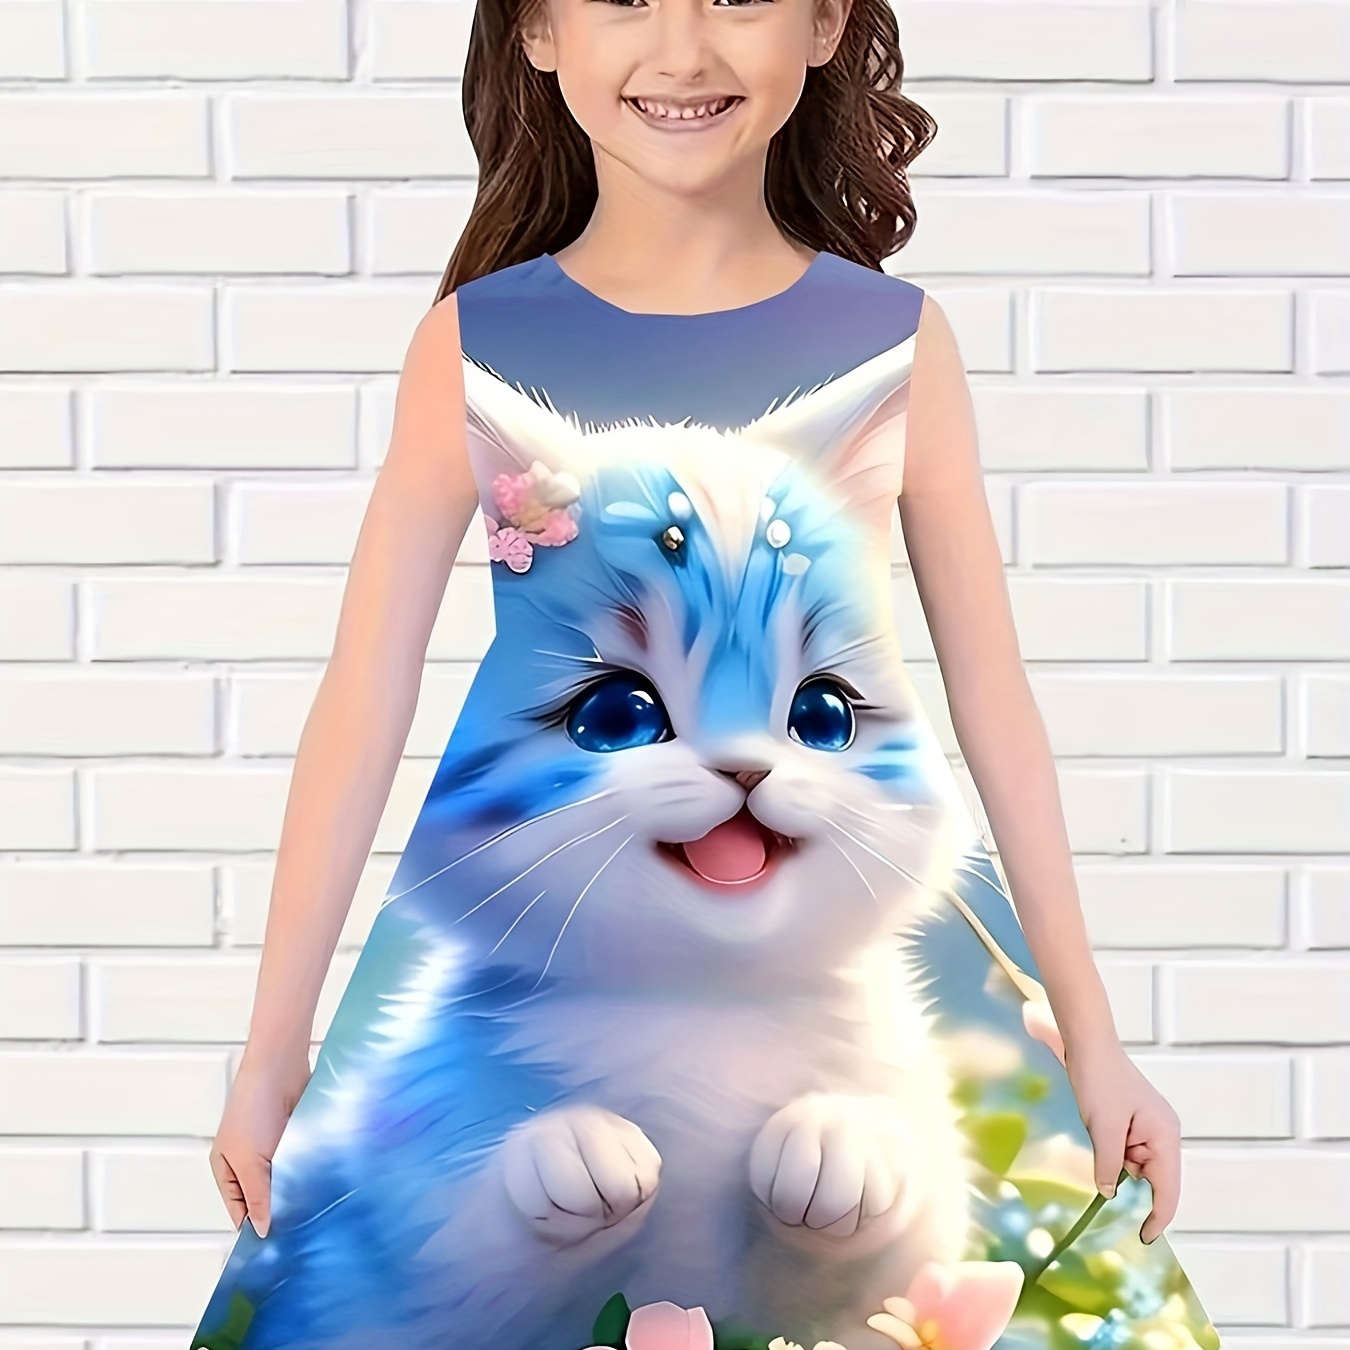 

Cartoon Flower Kitty Print Dress Girls Casual Sleeveless Dresses For Summer Party Gift Outdoor